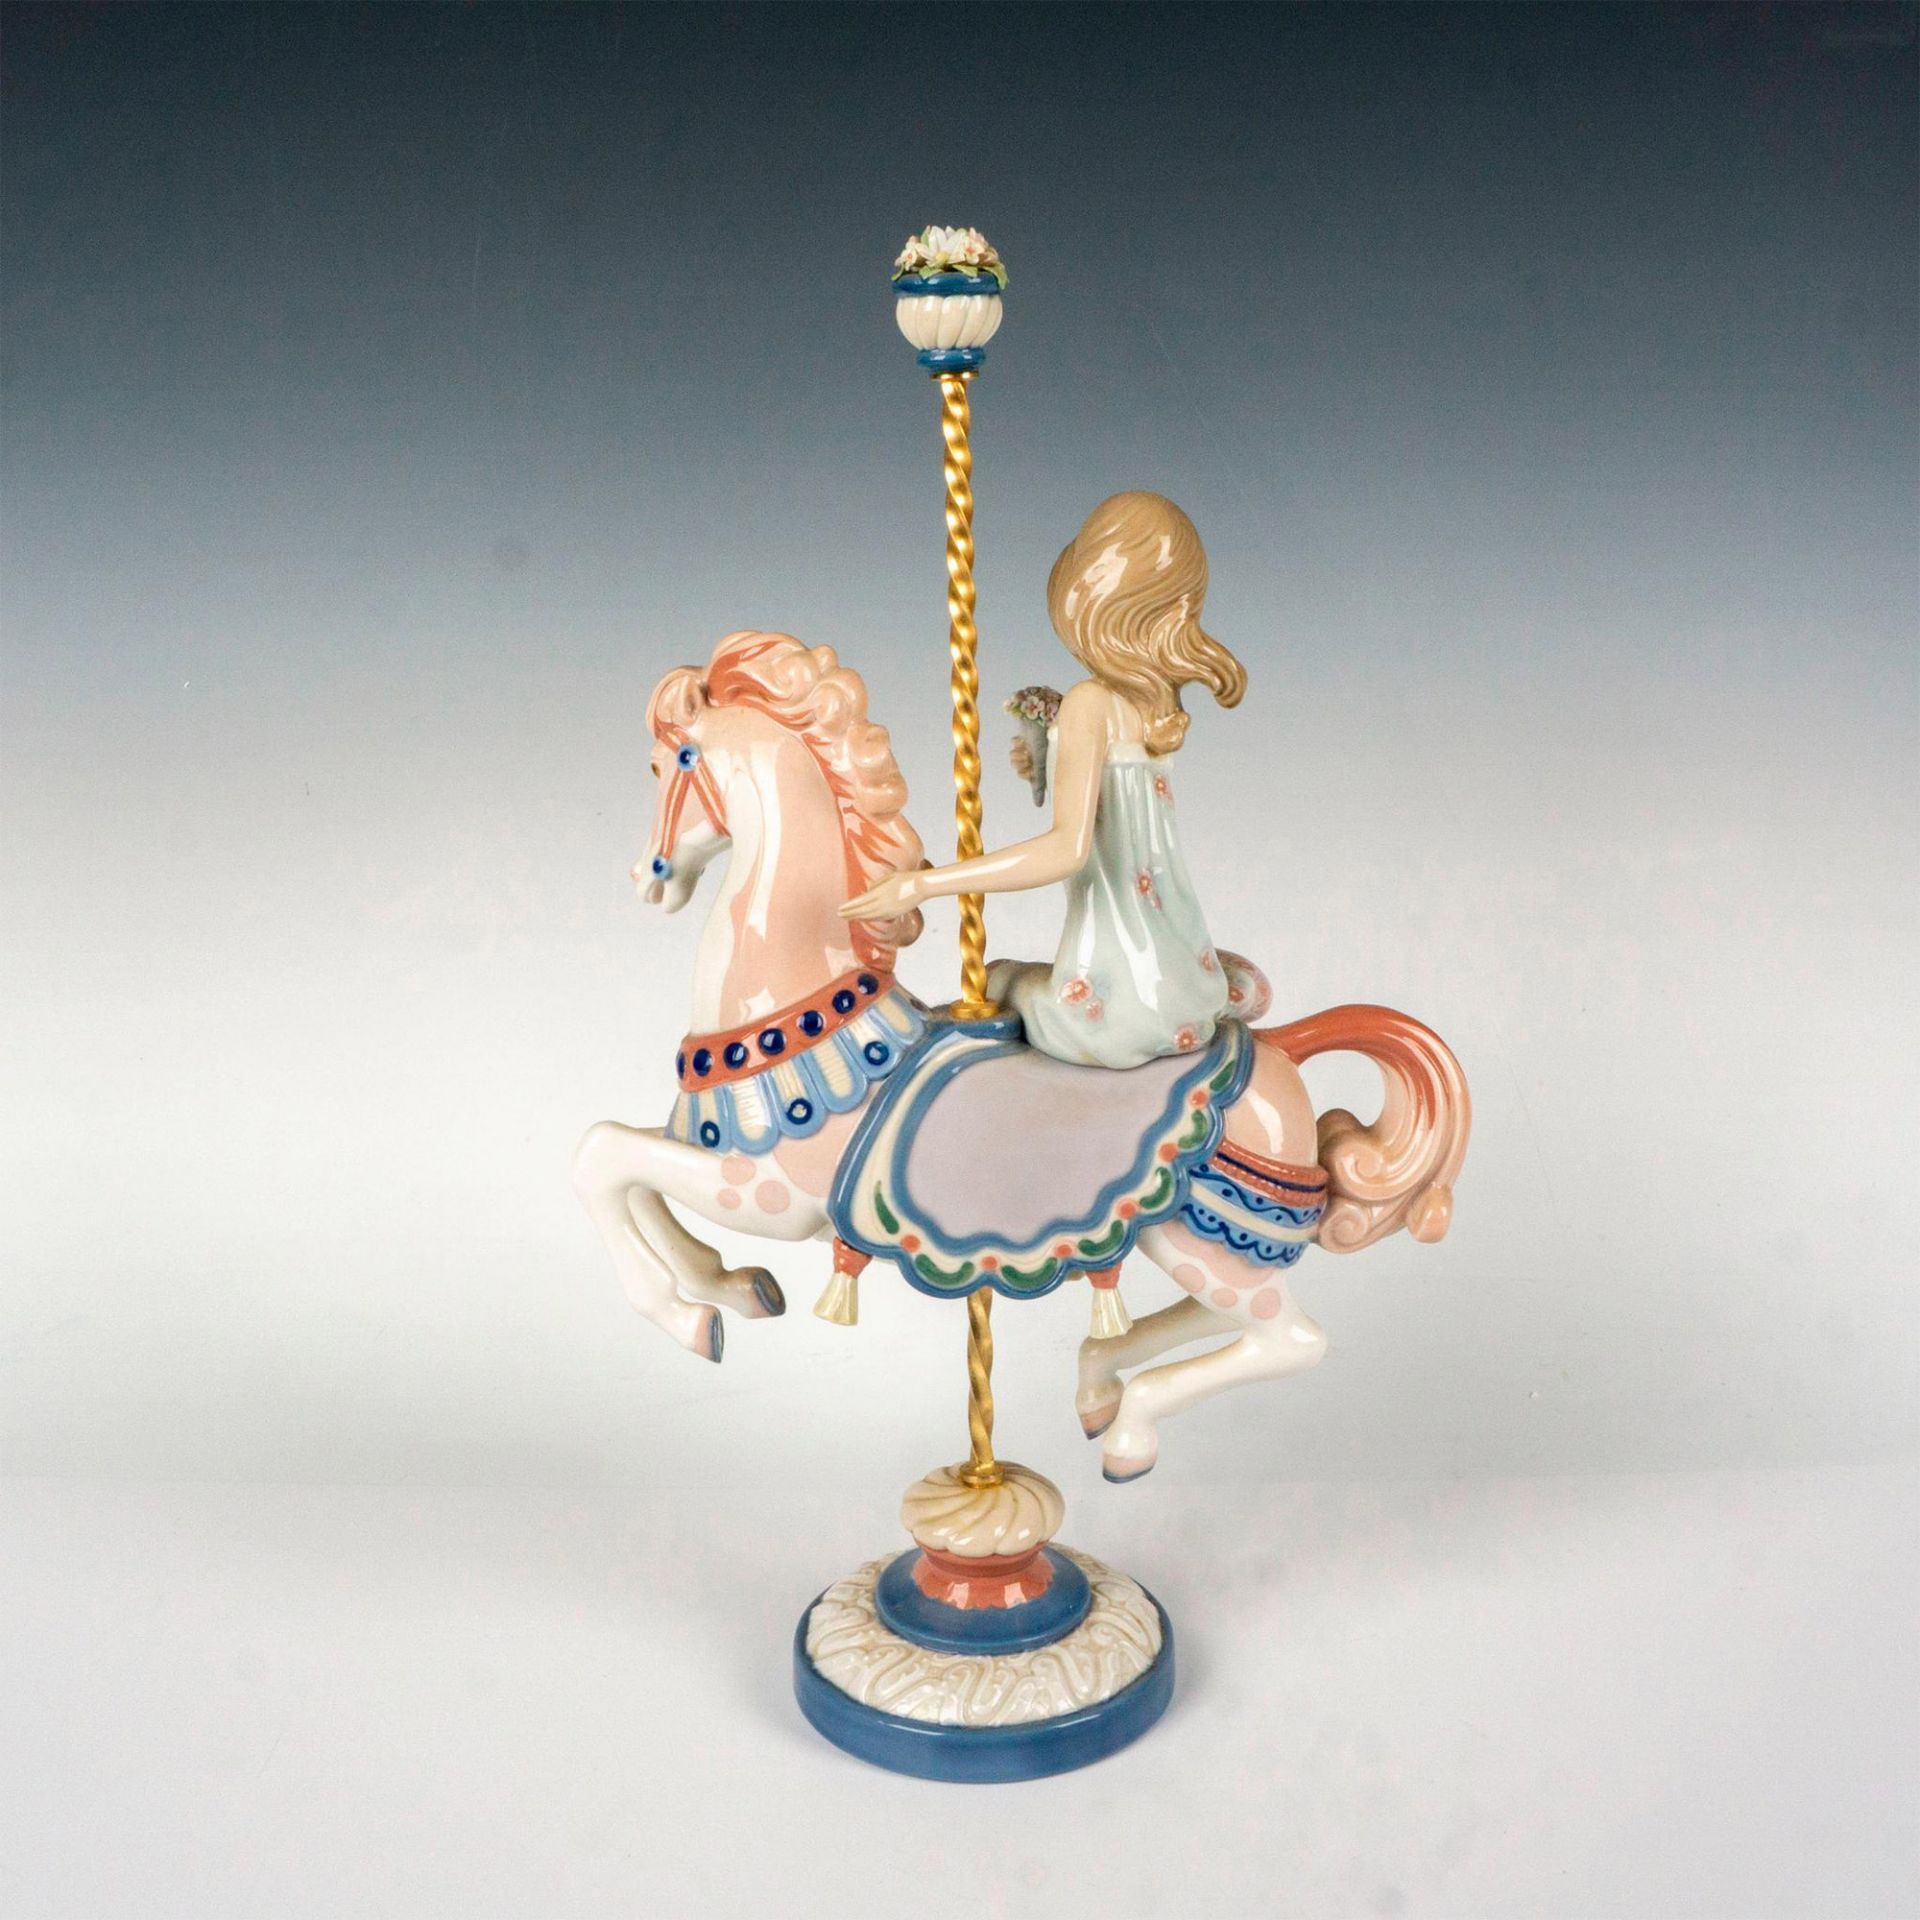 Girl On Carousel Horse 1001469 - Lladro Porcelain Figurine - Image 2 of 3